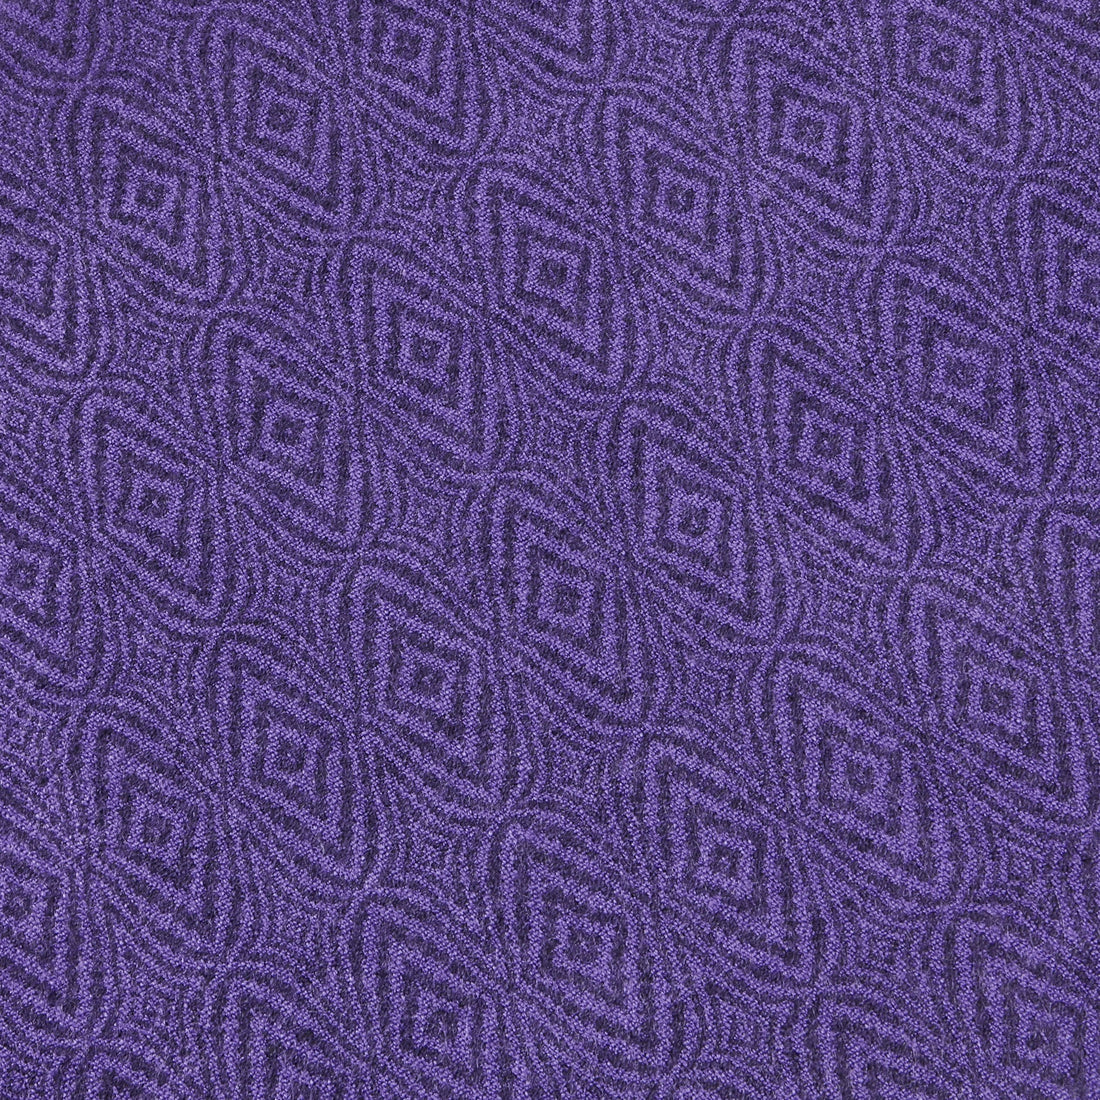 Purple Infinity Scarf